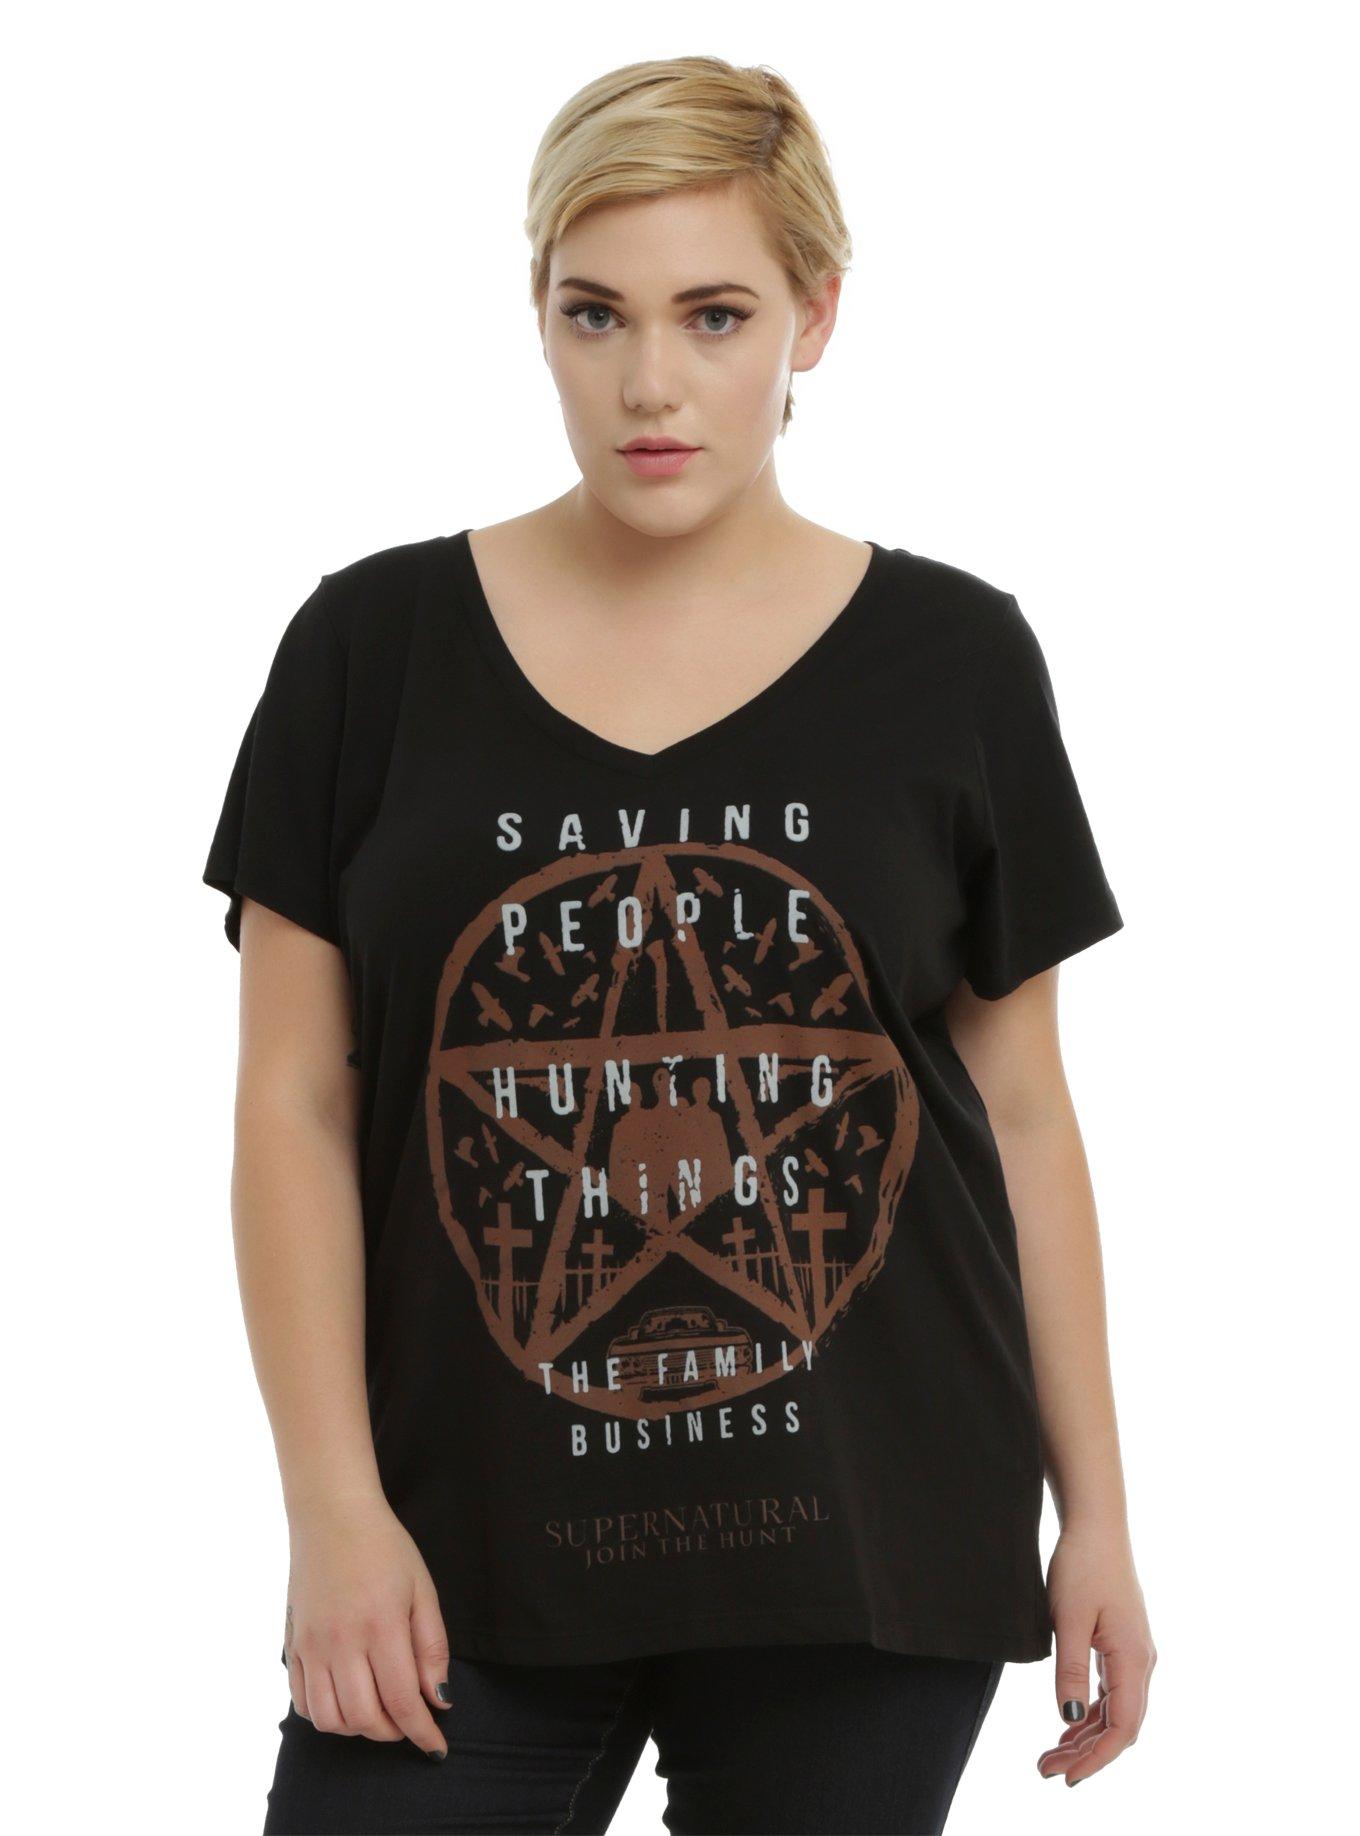 Supernatural Family Business Girls T-Shirt Plus Size, BLACK, hi-res